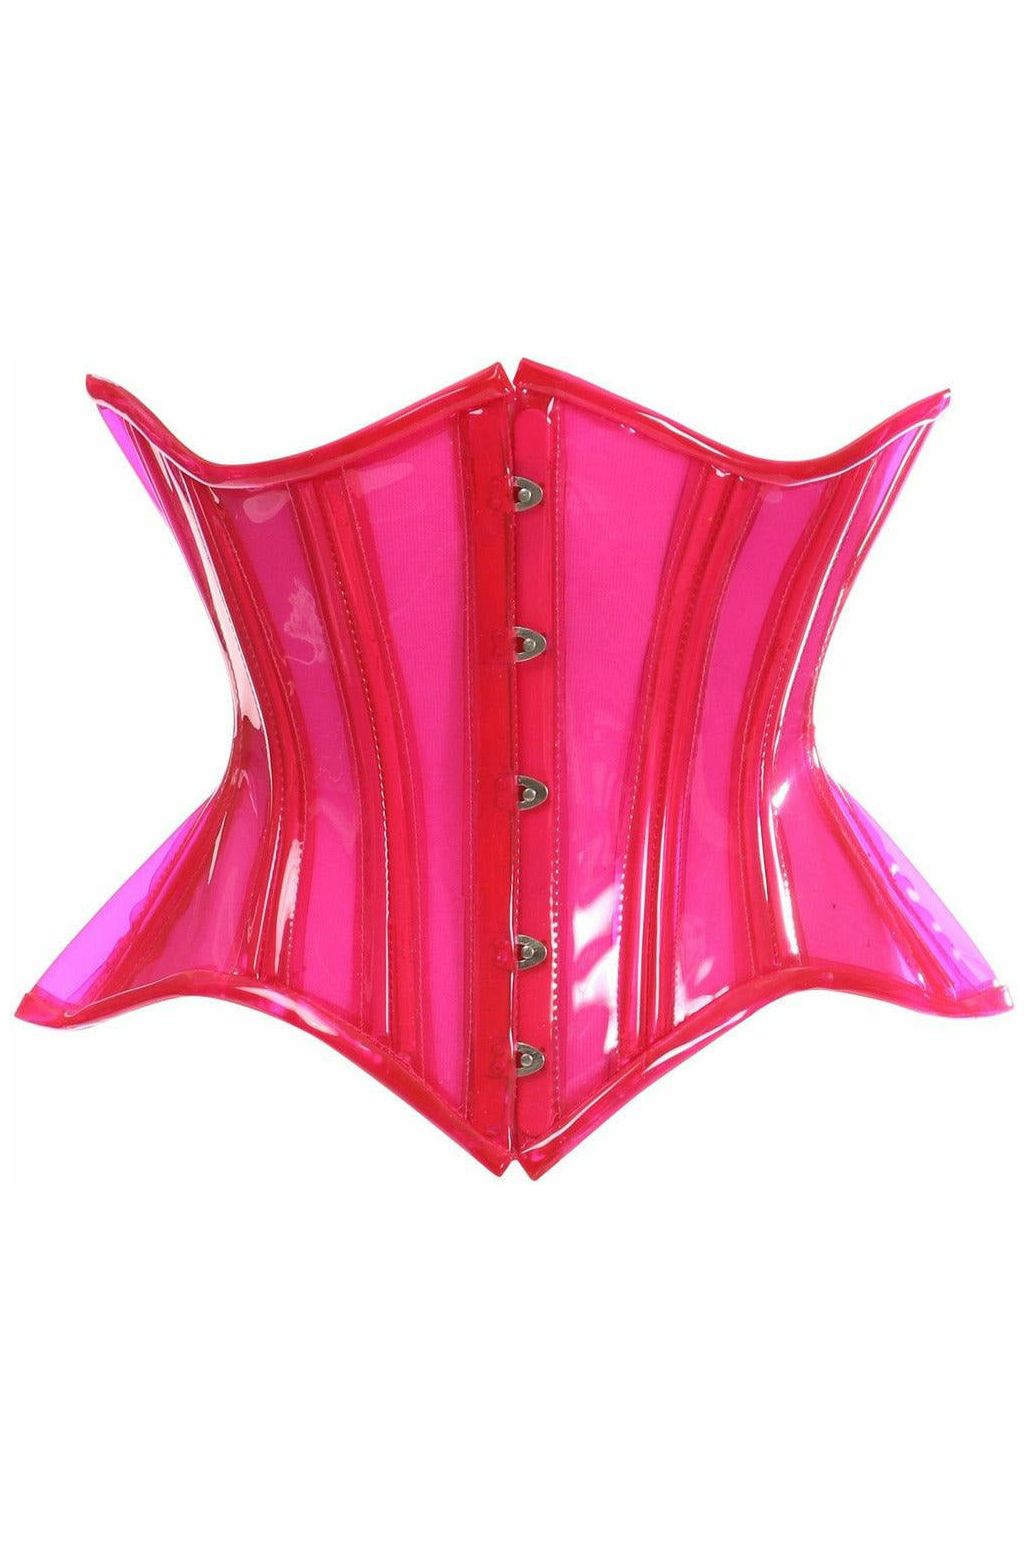 Lavish Pink Clear Curvy Underbust Waist Cincher Corset - Daisy Corsets